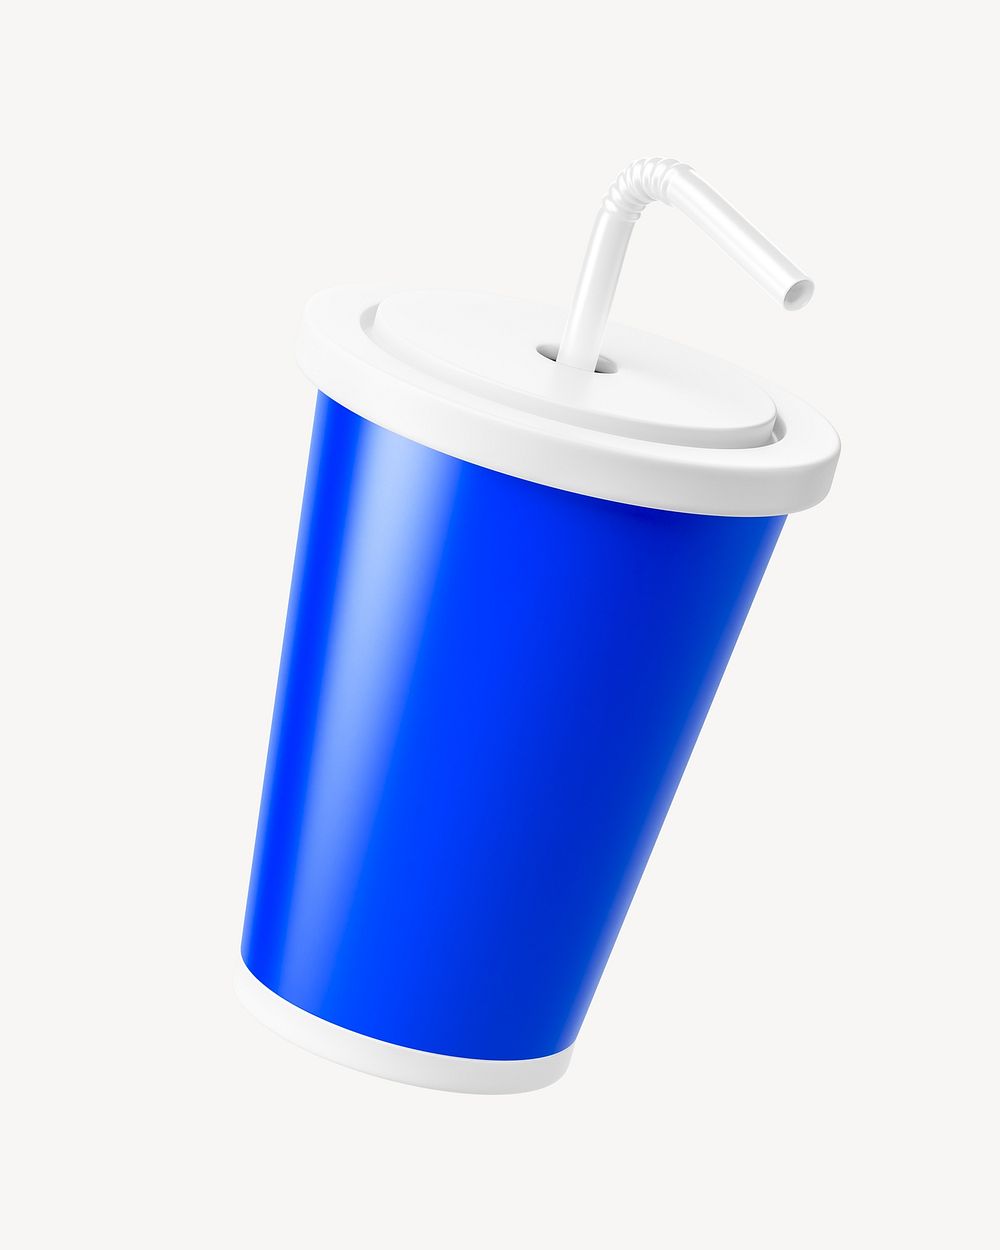 3D soda cup, element illustration